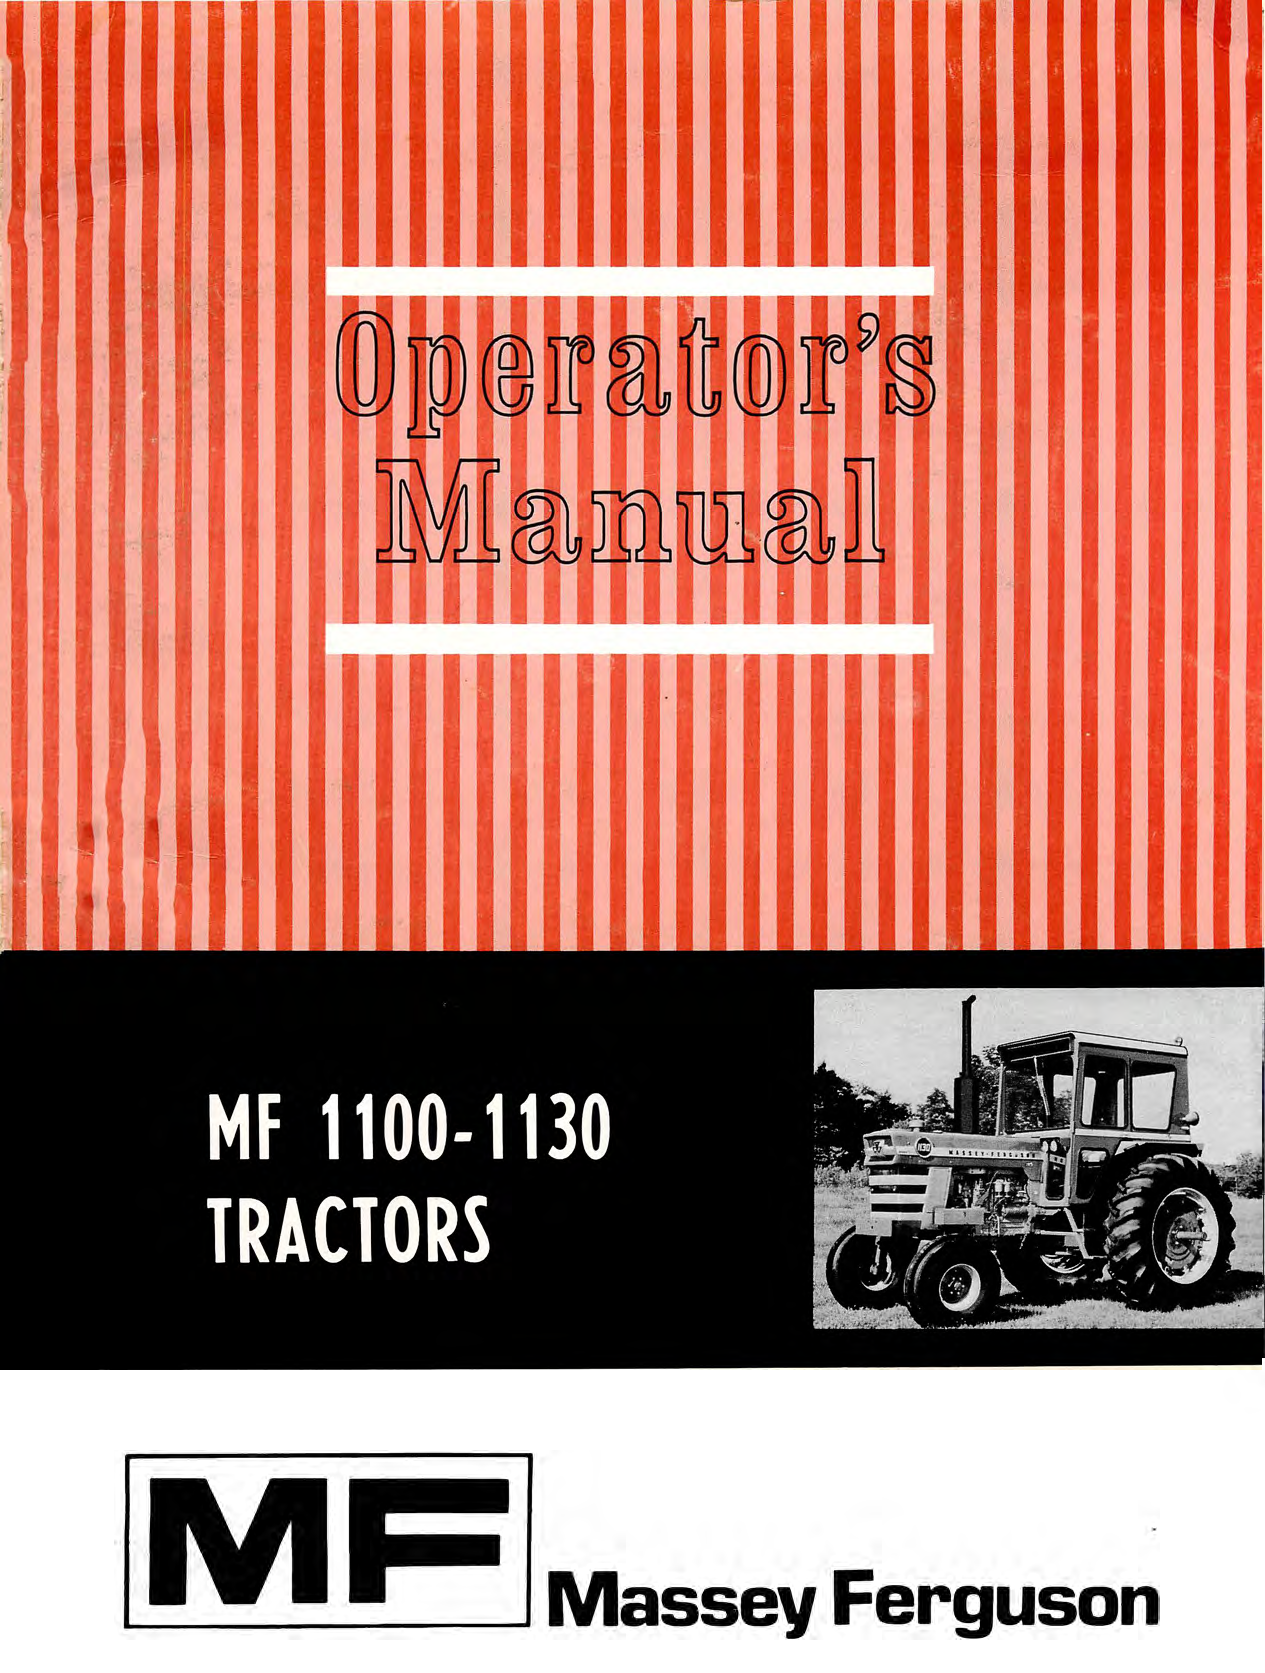 Massey Ferguson MF 1100 - 1130 Tractor Operator's Manual